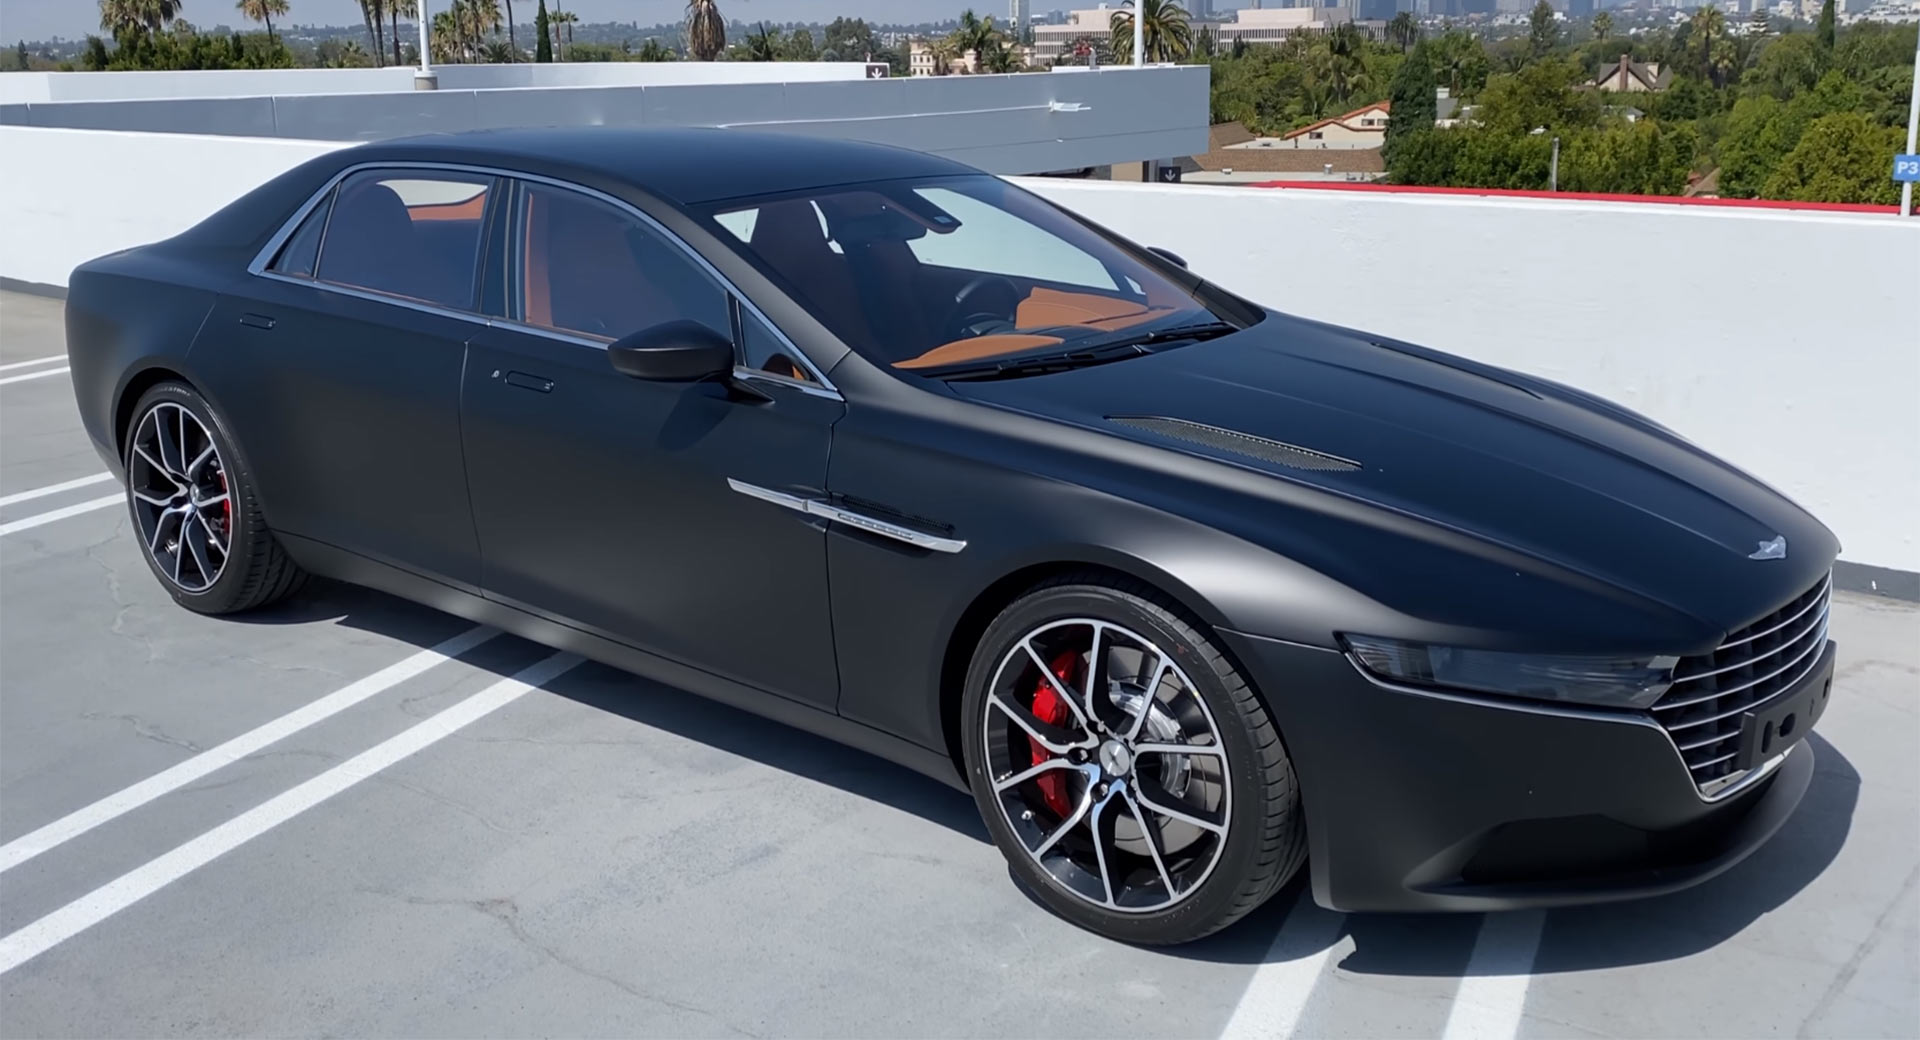 Aston Martin Lagonda Taraf Meet The World’s Most Expensive Luxury